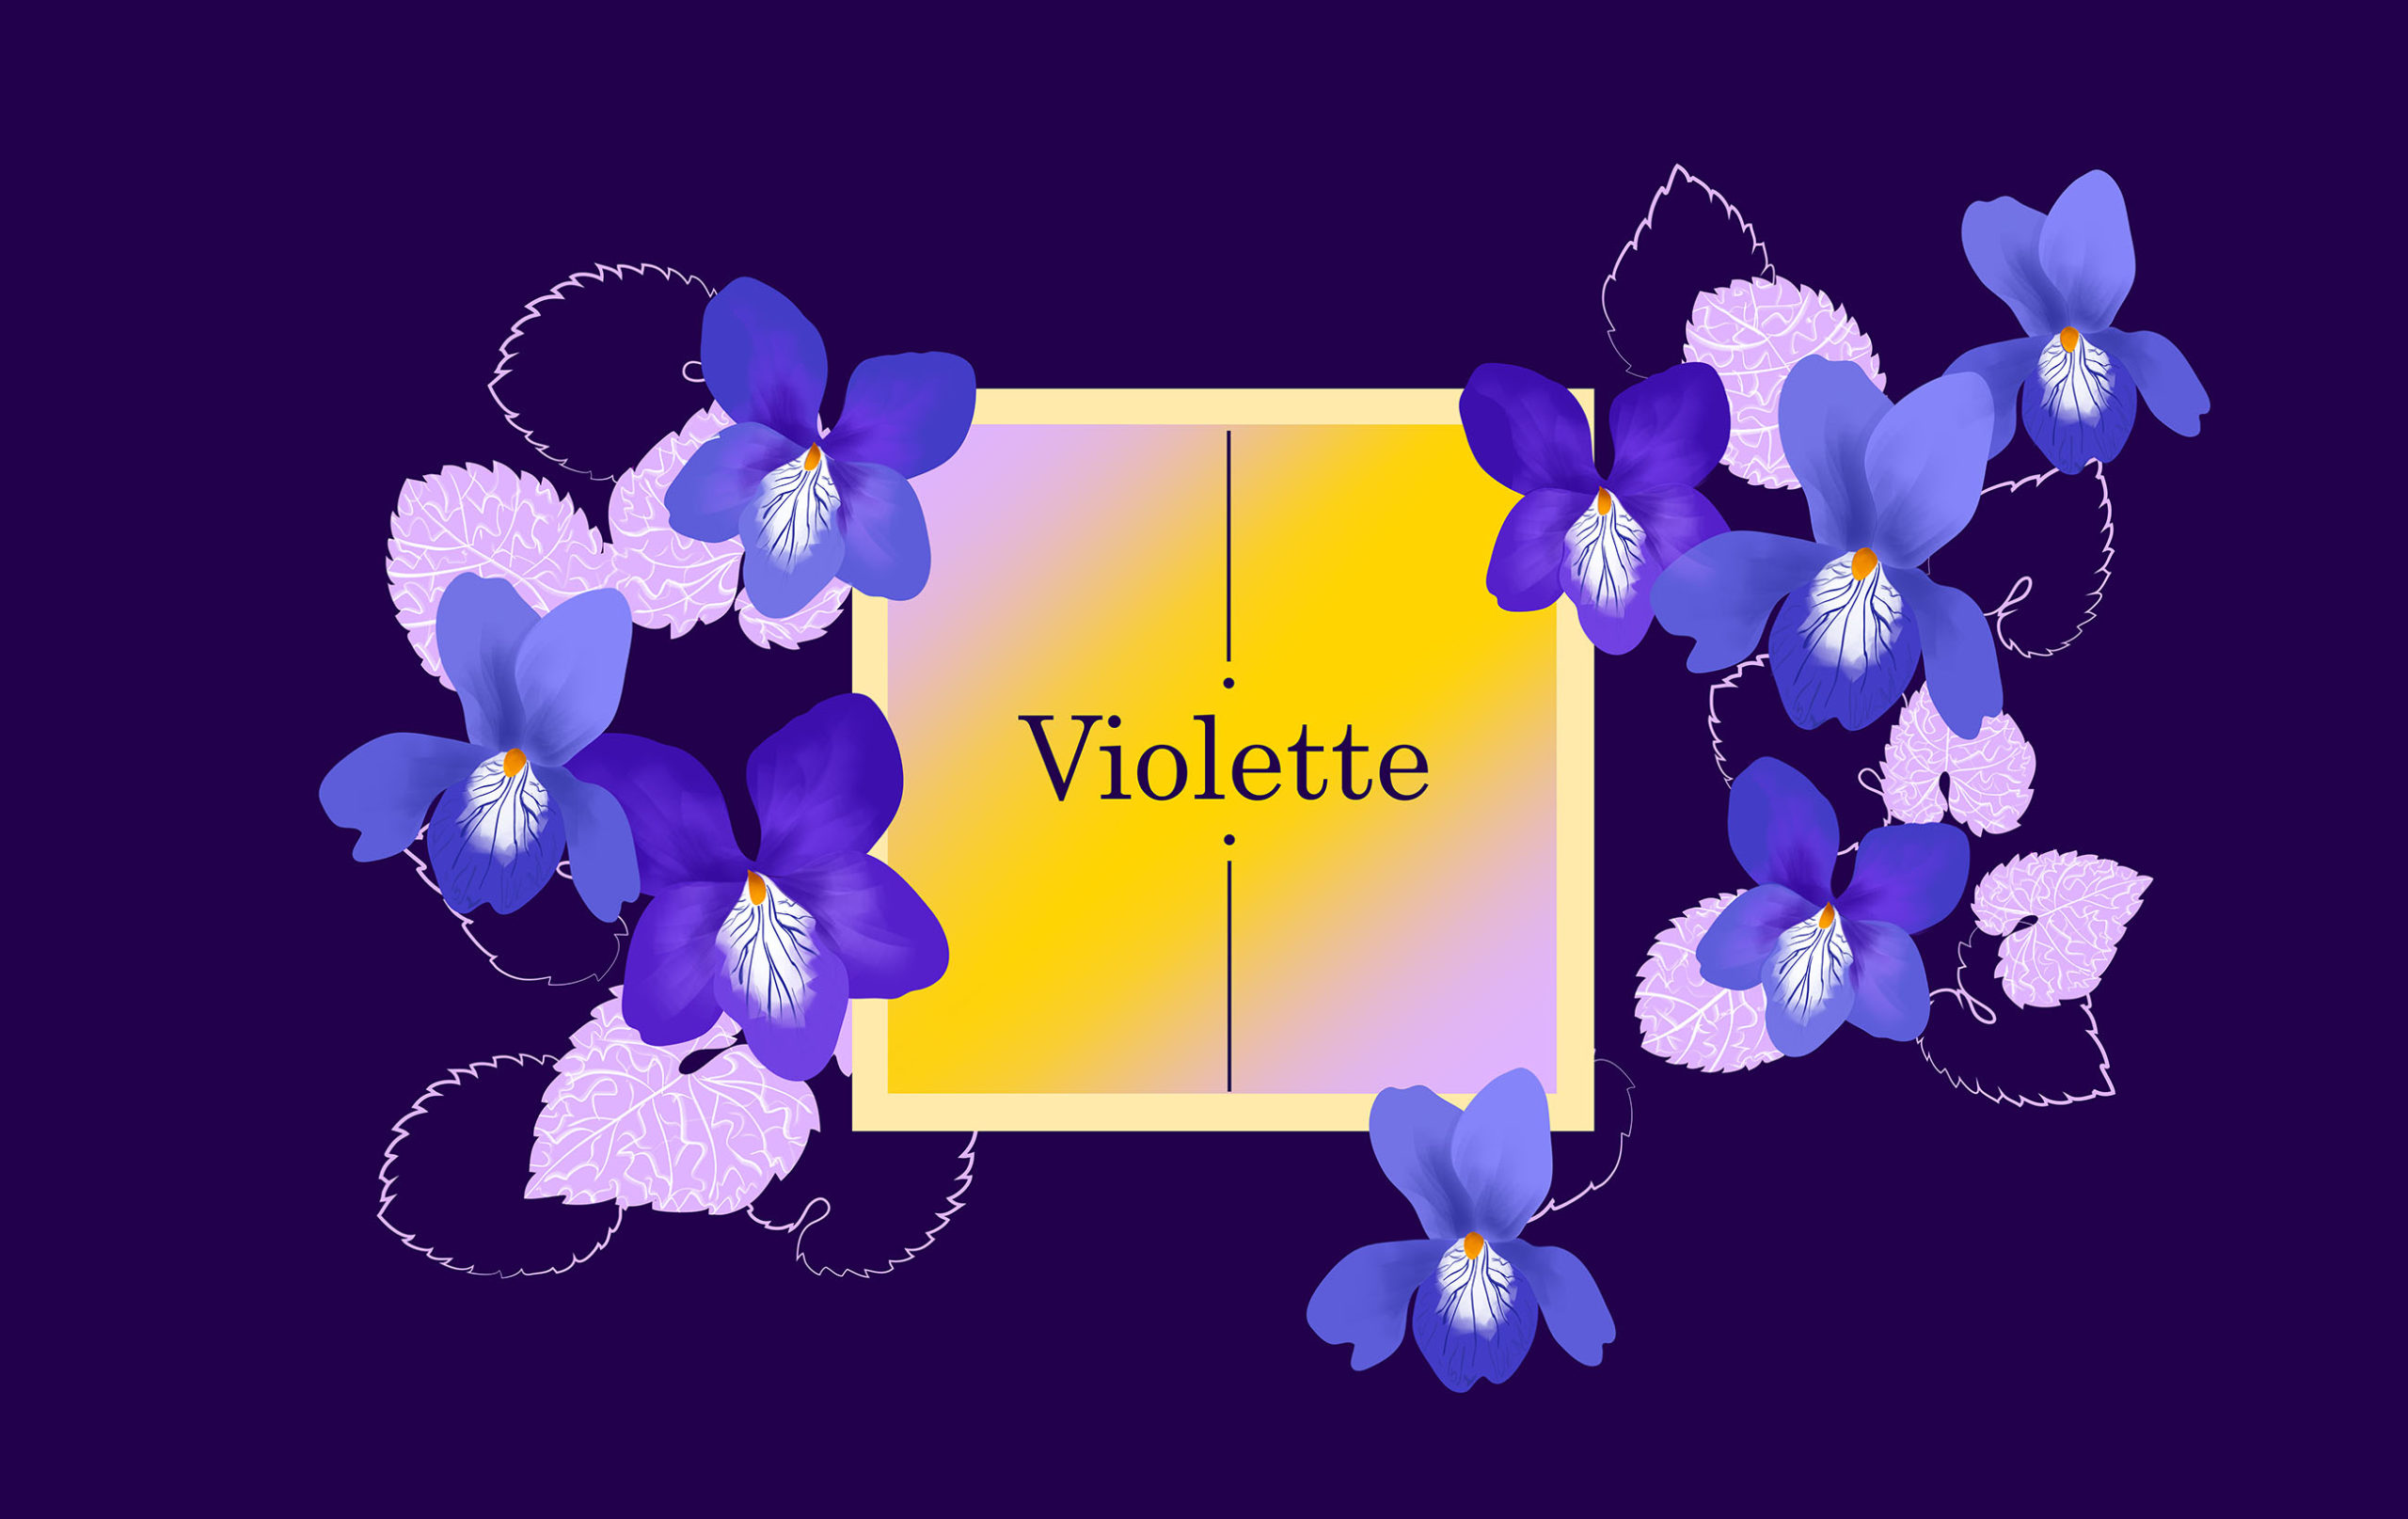 juliette-bedouet-graphiste-motiondesigner-freelance-Nice-Paris-Illustration_Violette